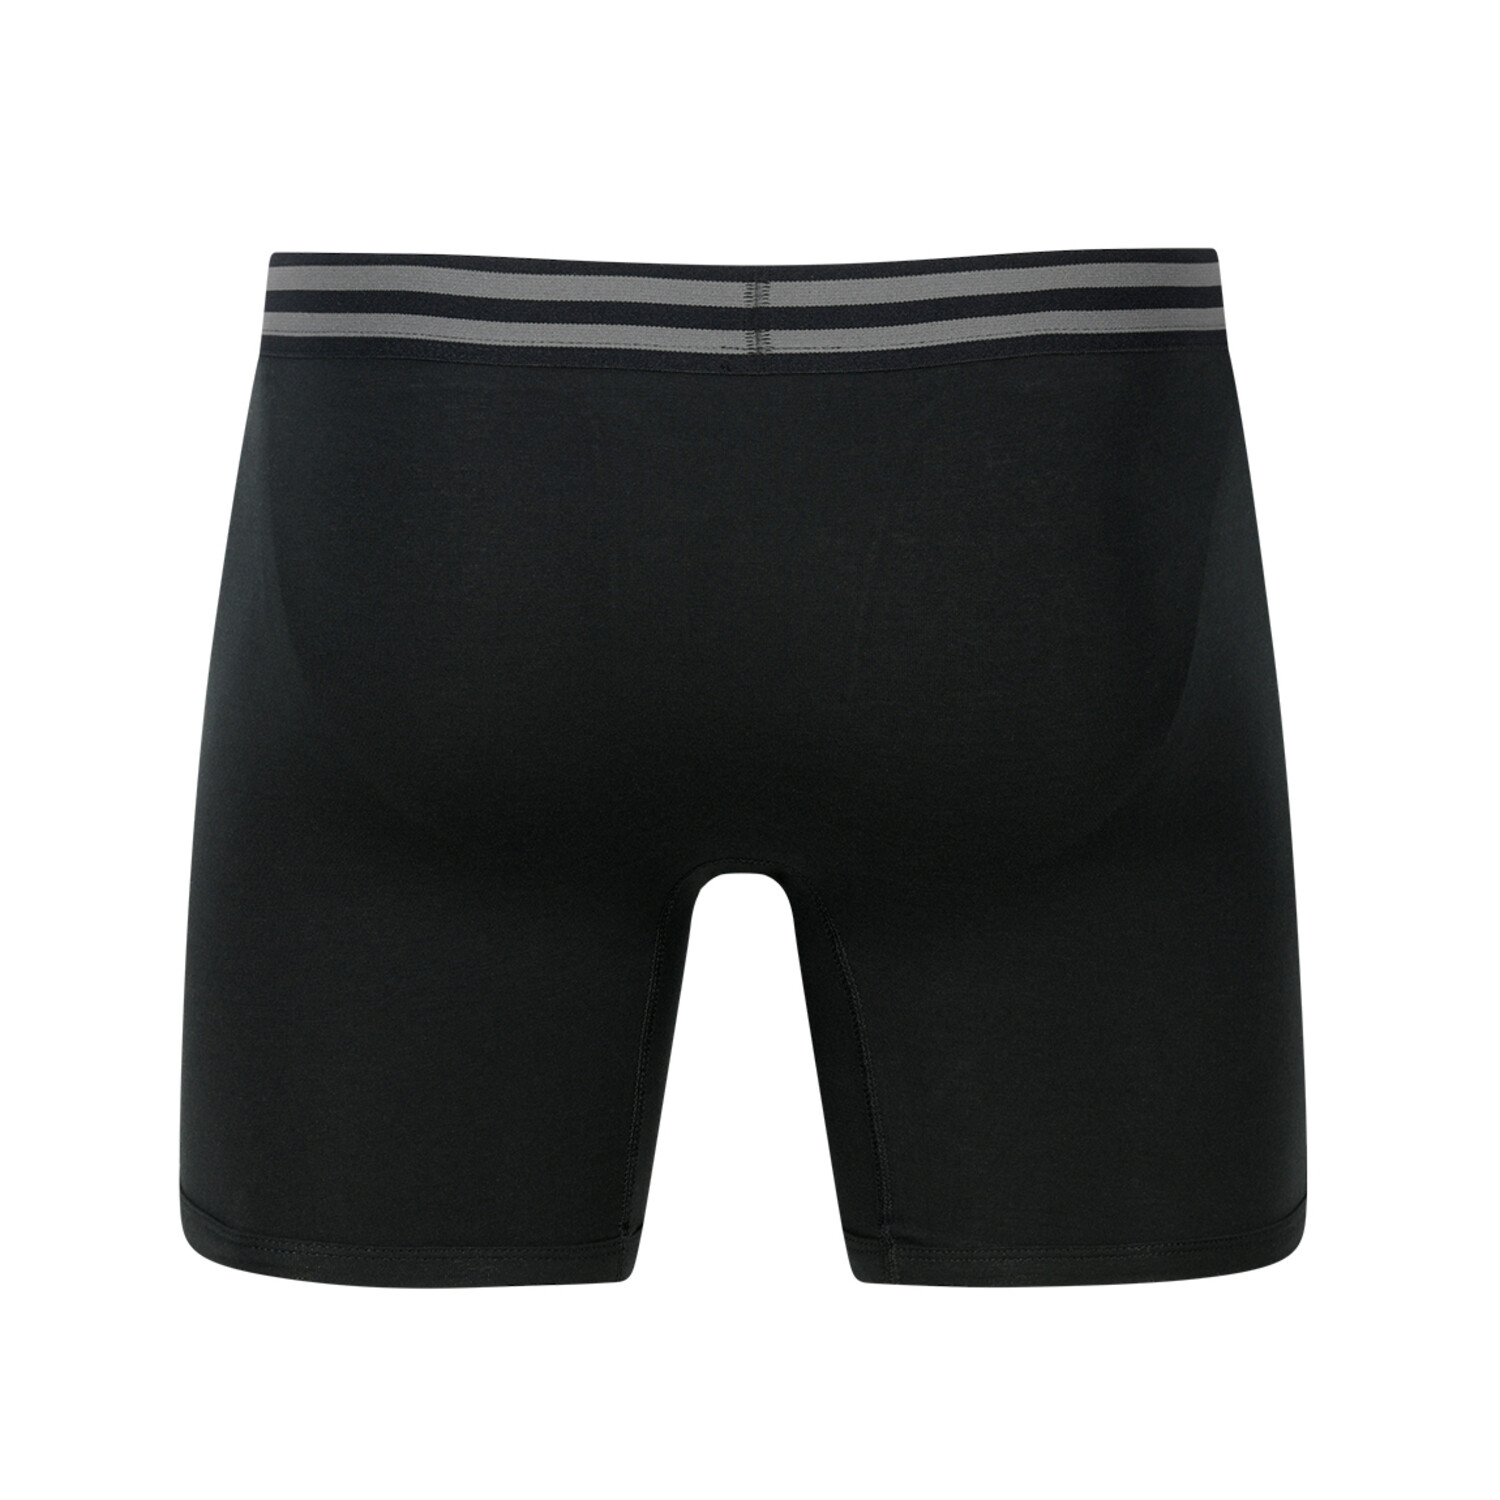 SHEATH 4.0 Cotton Men's Dual Pouch Boxer Brief // Black + Gray (X